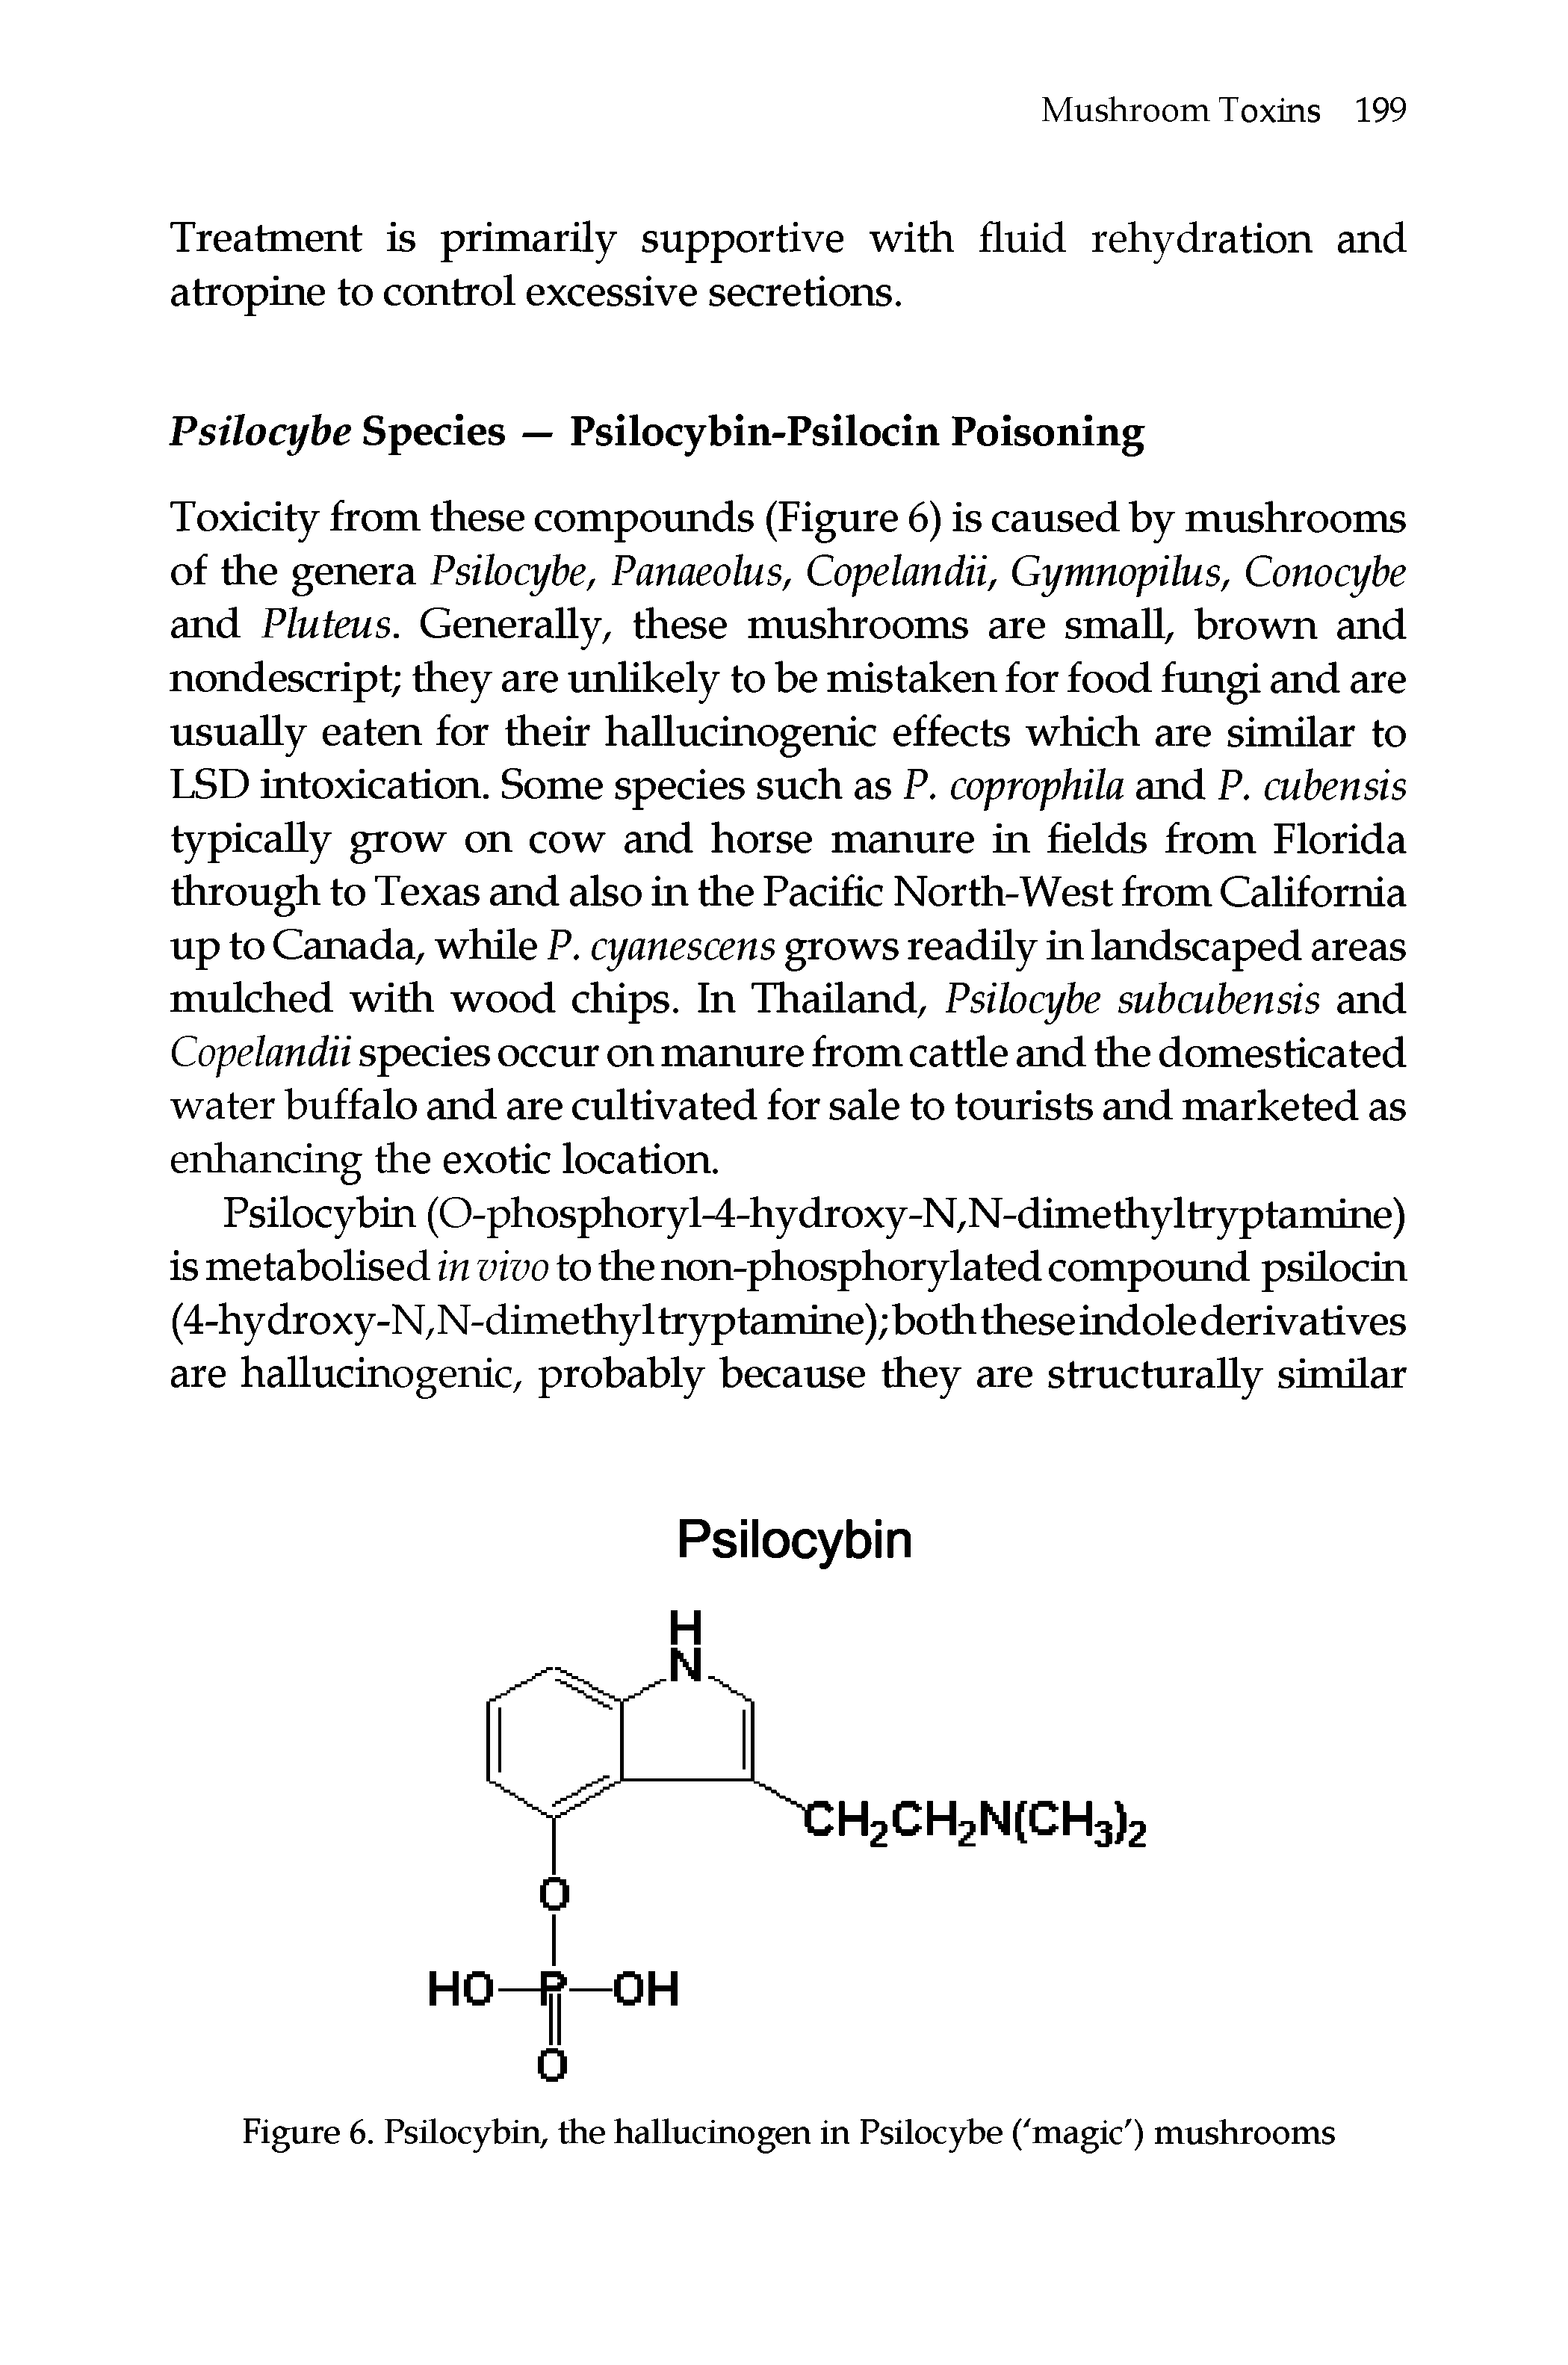 Figure 6. Psilocybin, the hallucinogen in Psilocybe ( magic ) mushrooms...